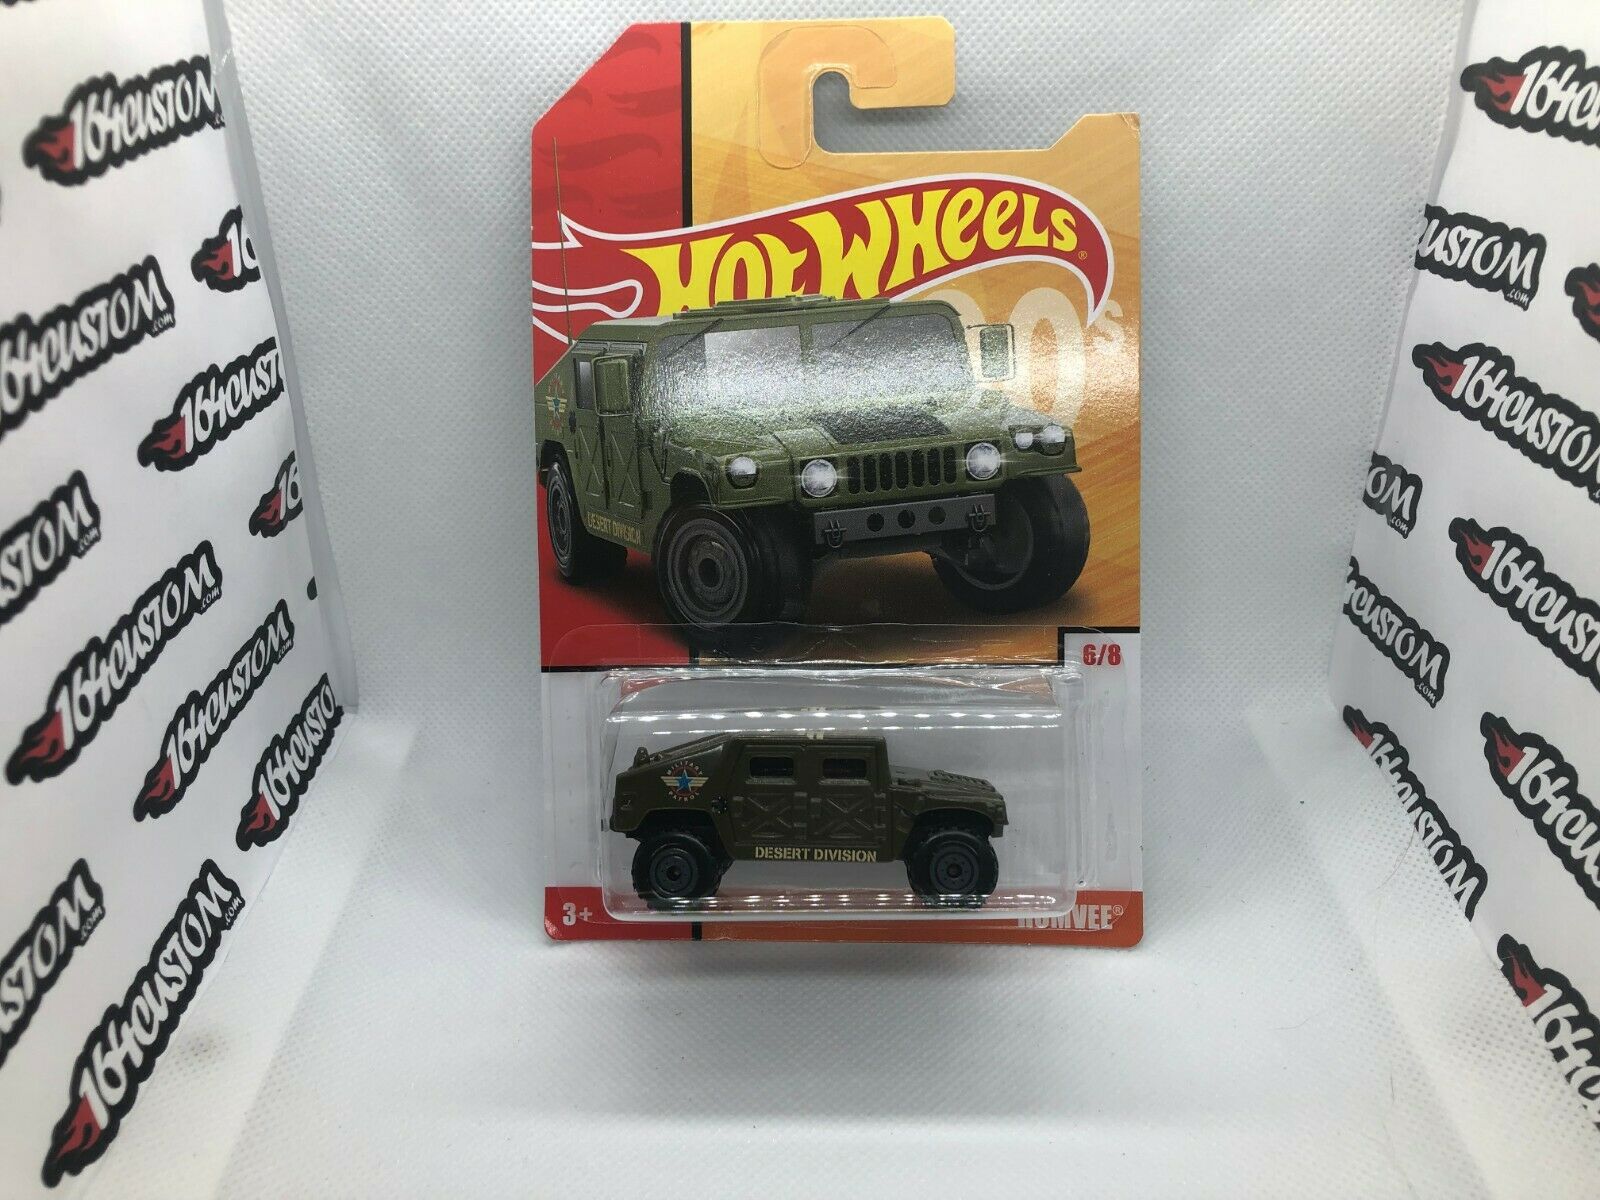 Humvee Hot Wheels